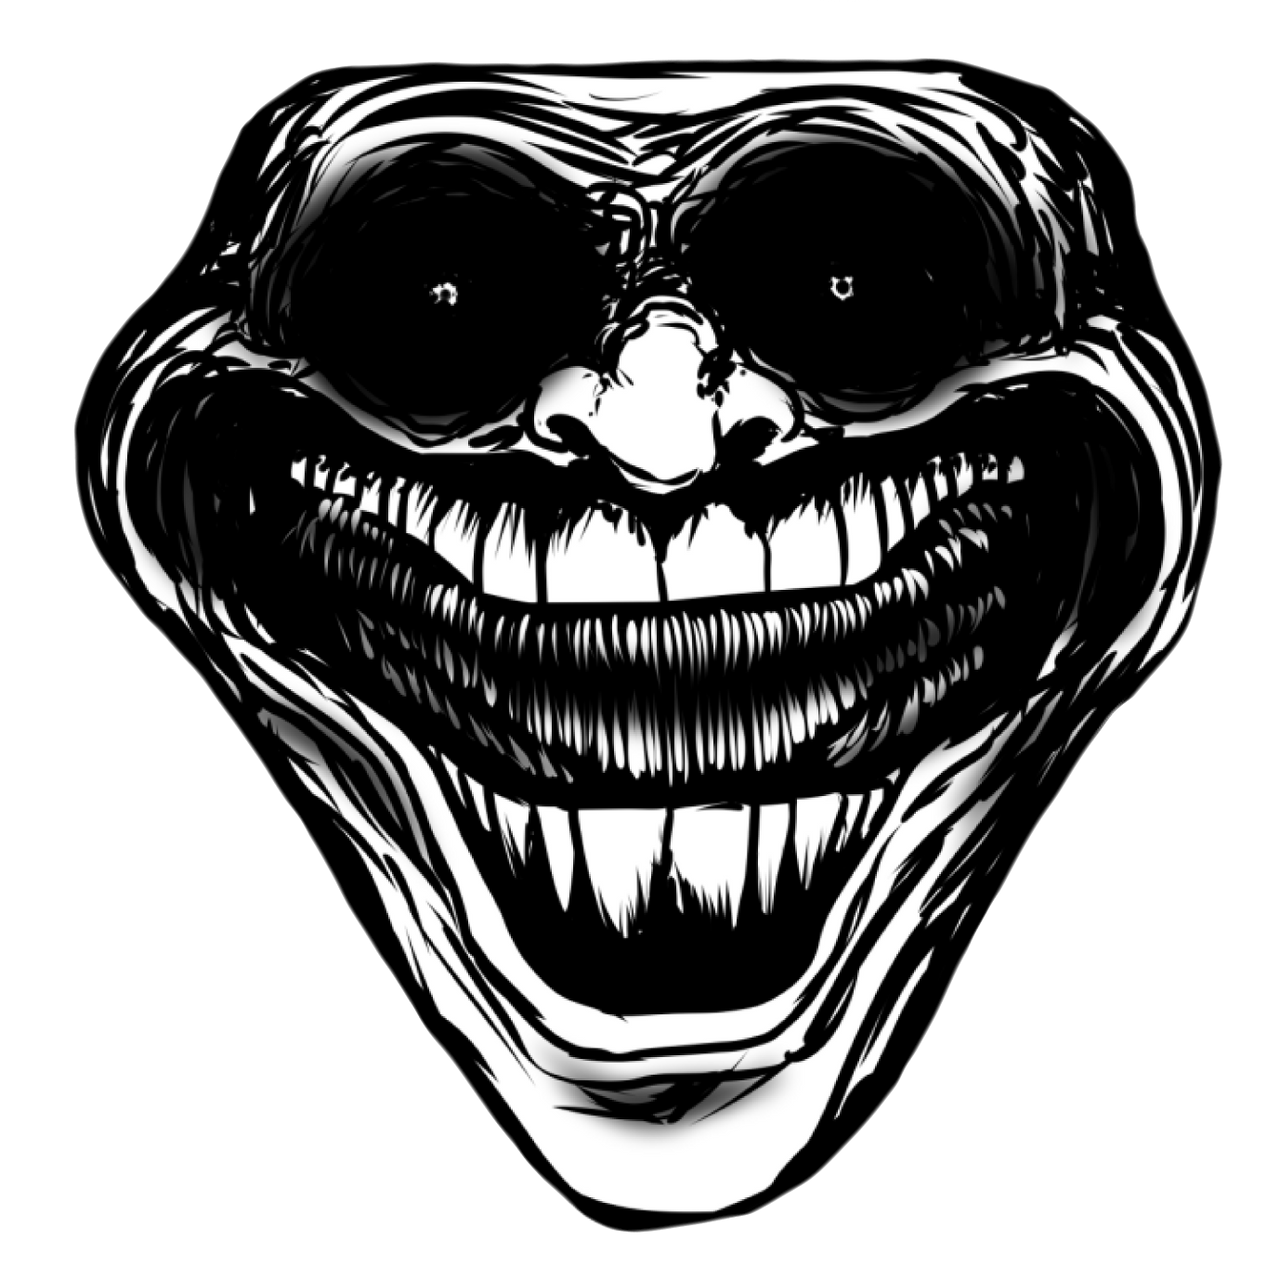 Creepy Trollface by Diegoroso16 on DeviantArt